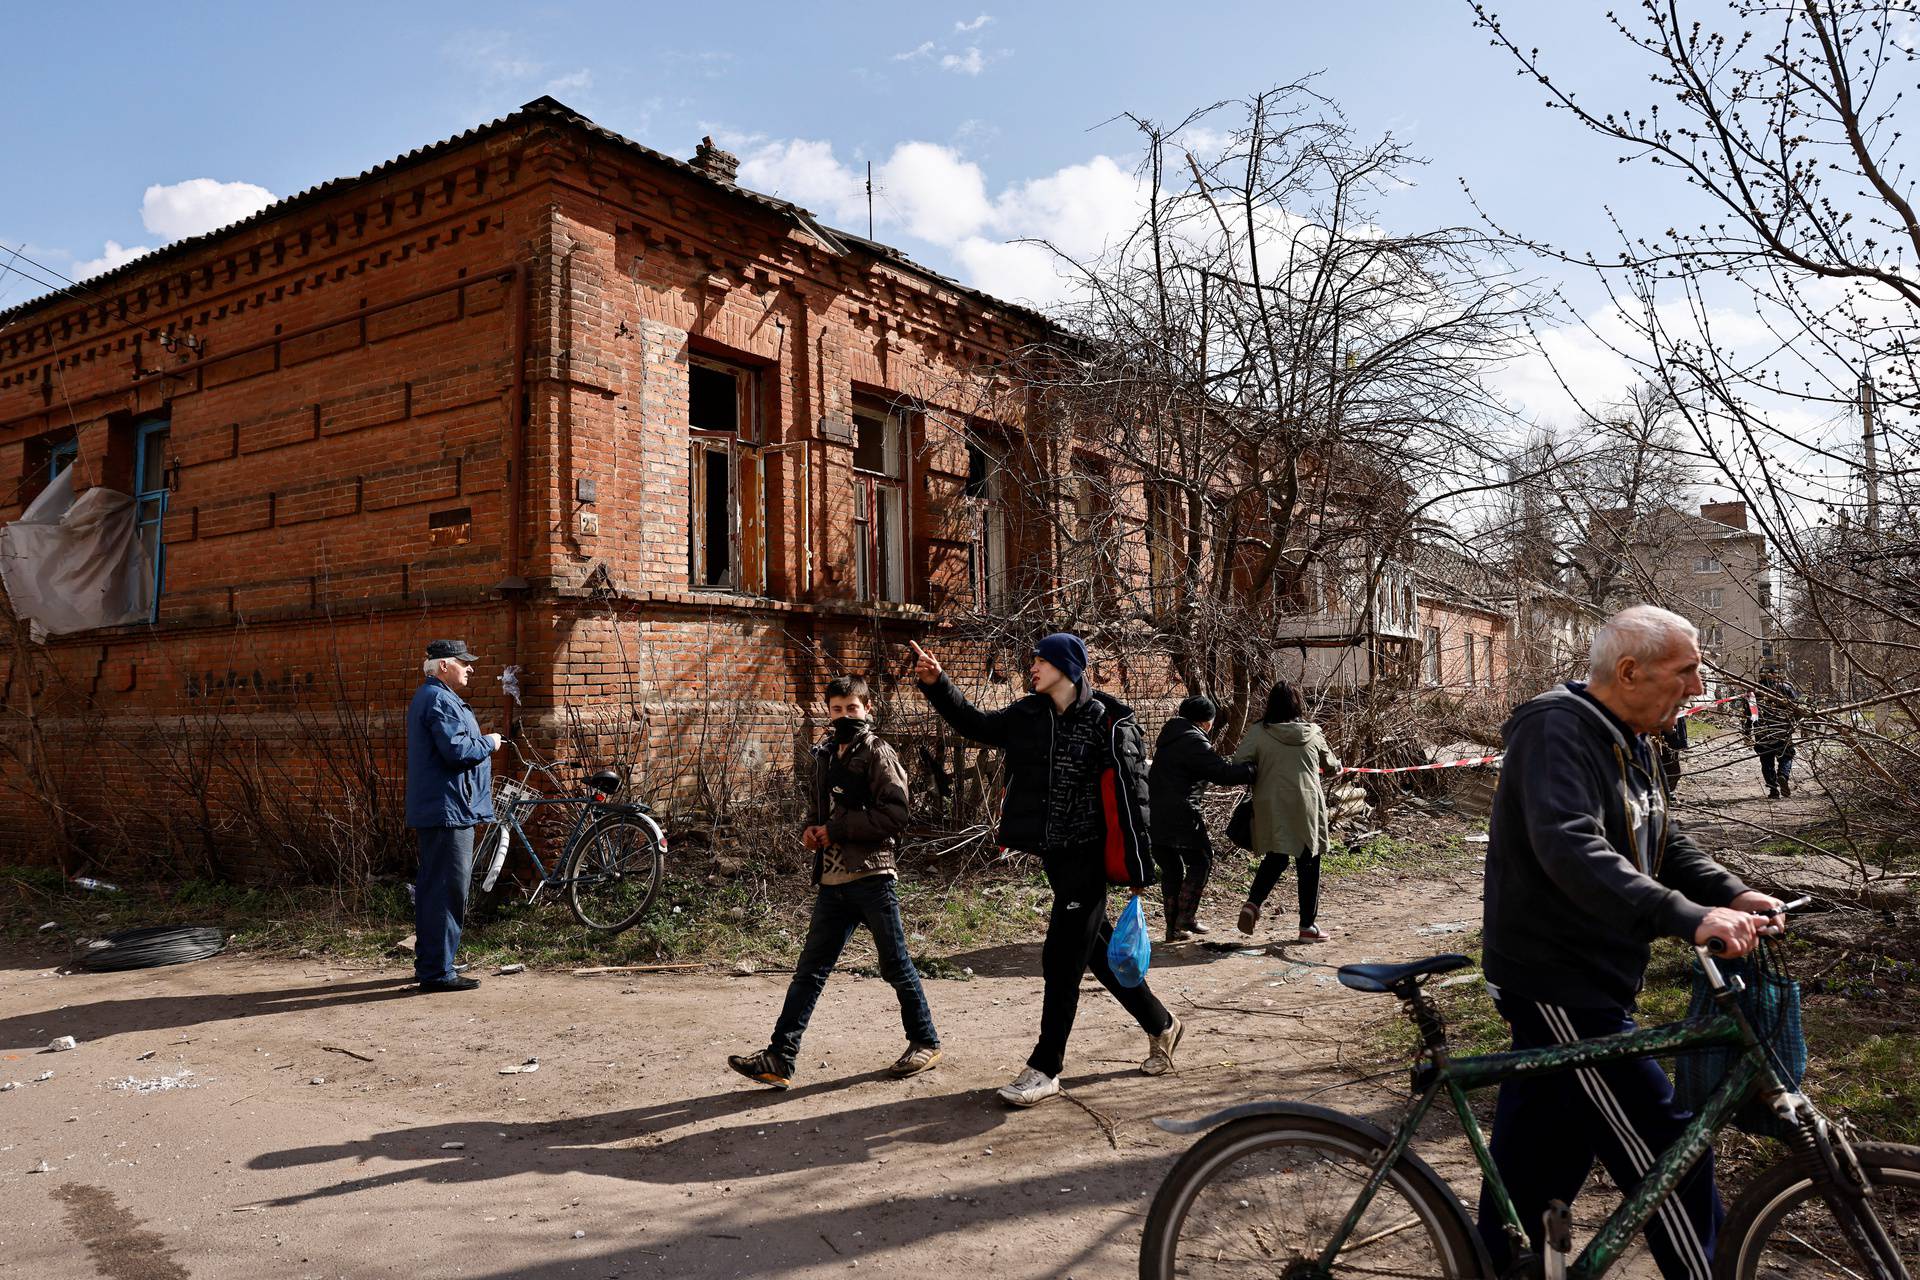 Aftermath of deadly shelling in Sloviansk